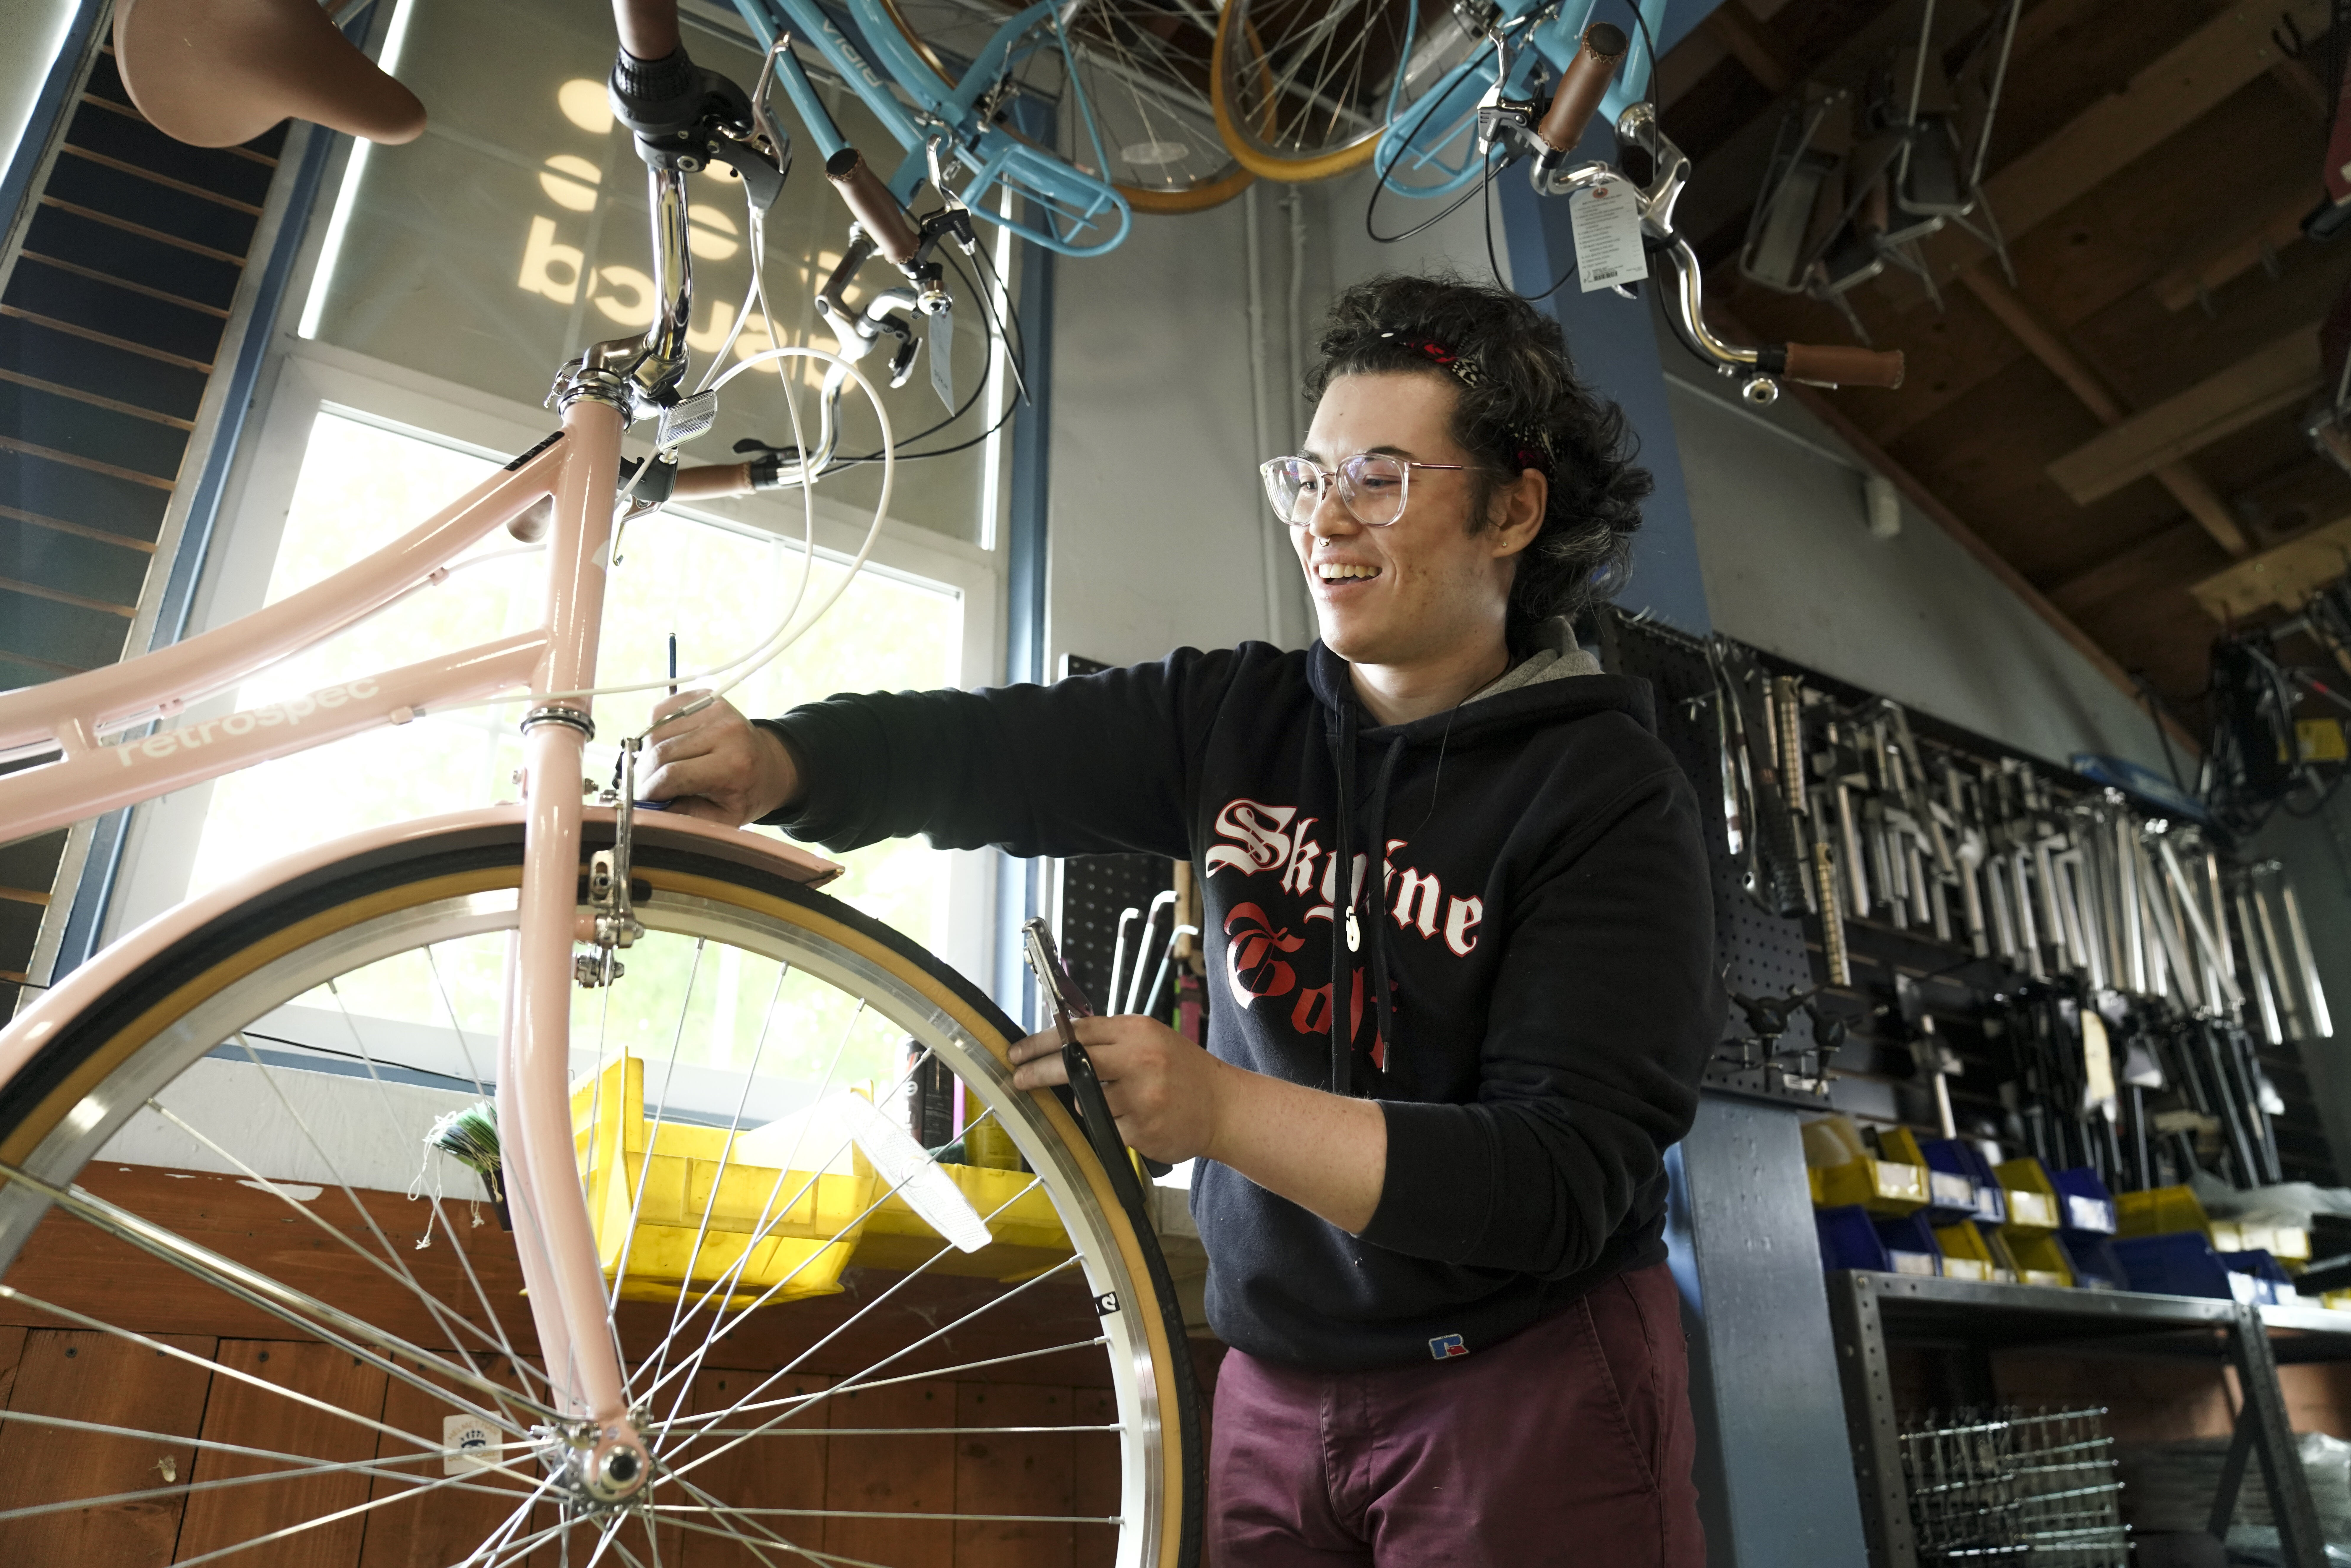 A student employee at the Bike Barn works on a bike.